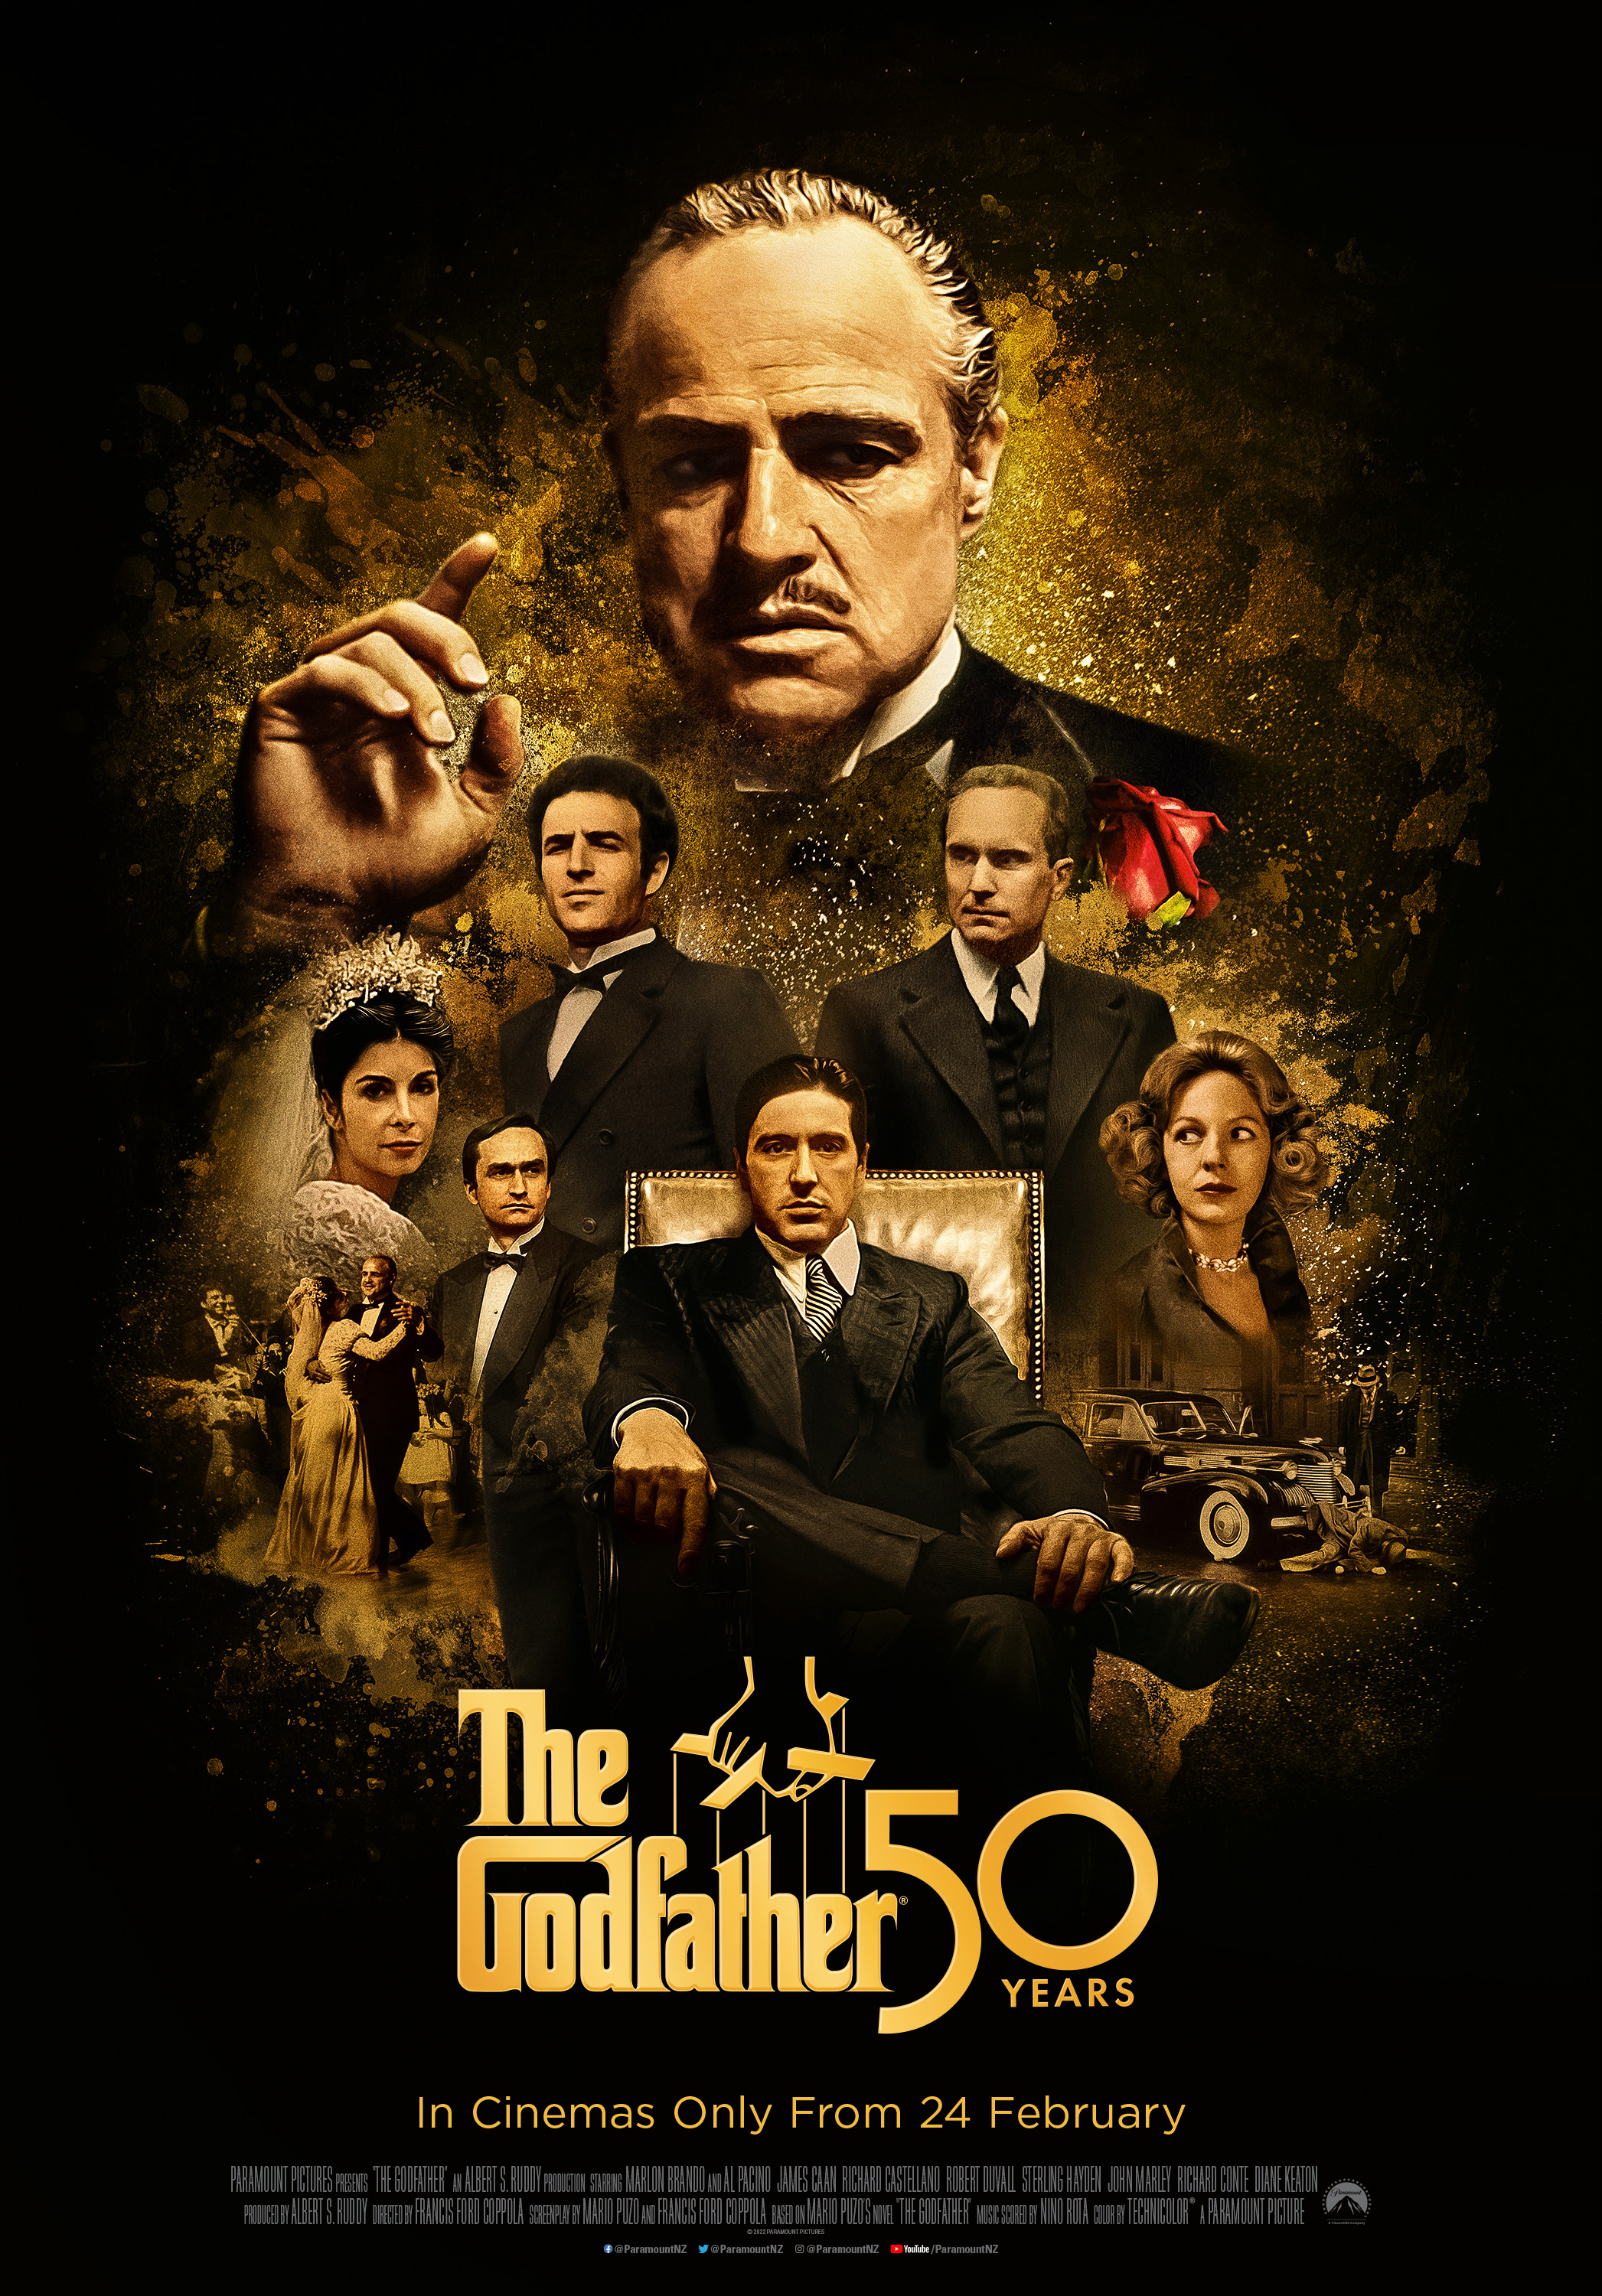 The Godfather - 50th Anniversary | HOYTS Cinemas